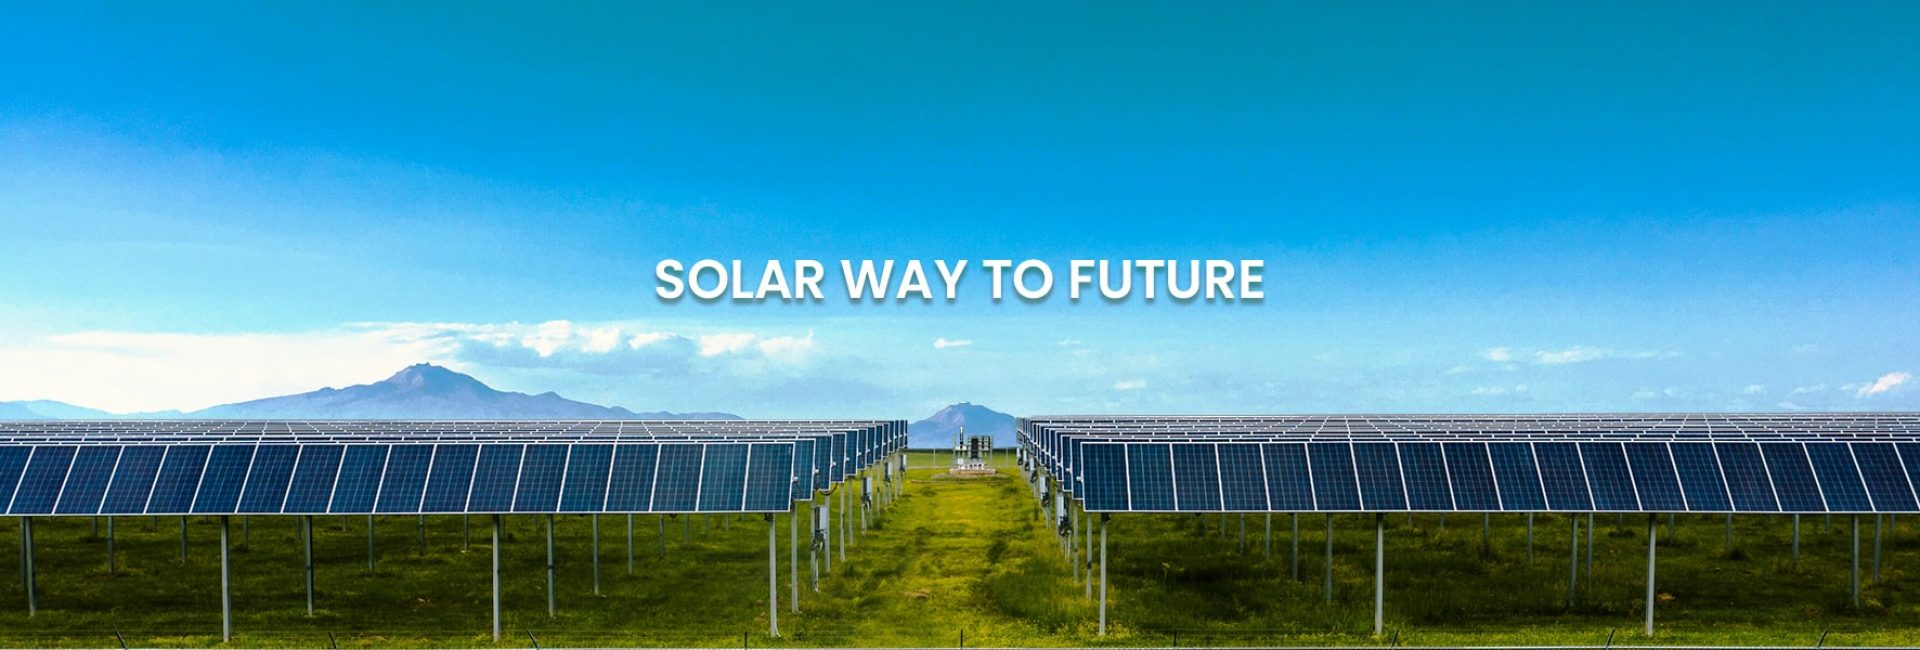 Solar Way to future